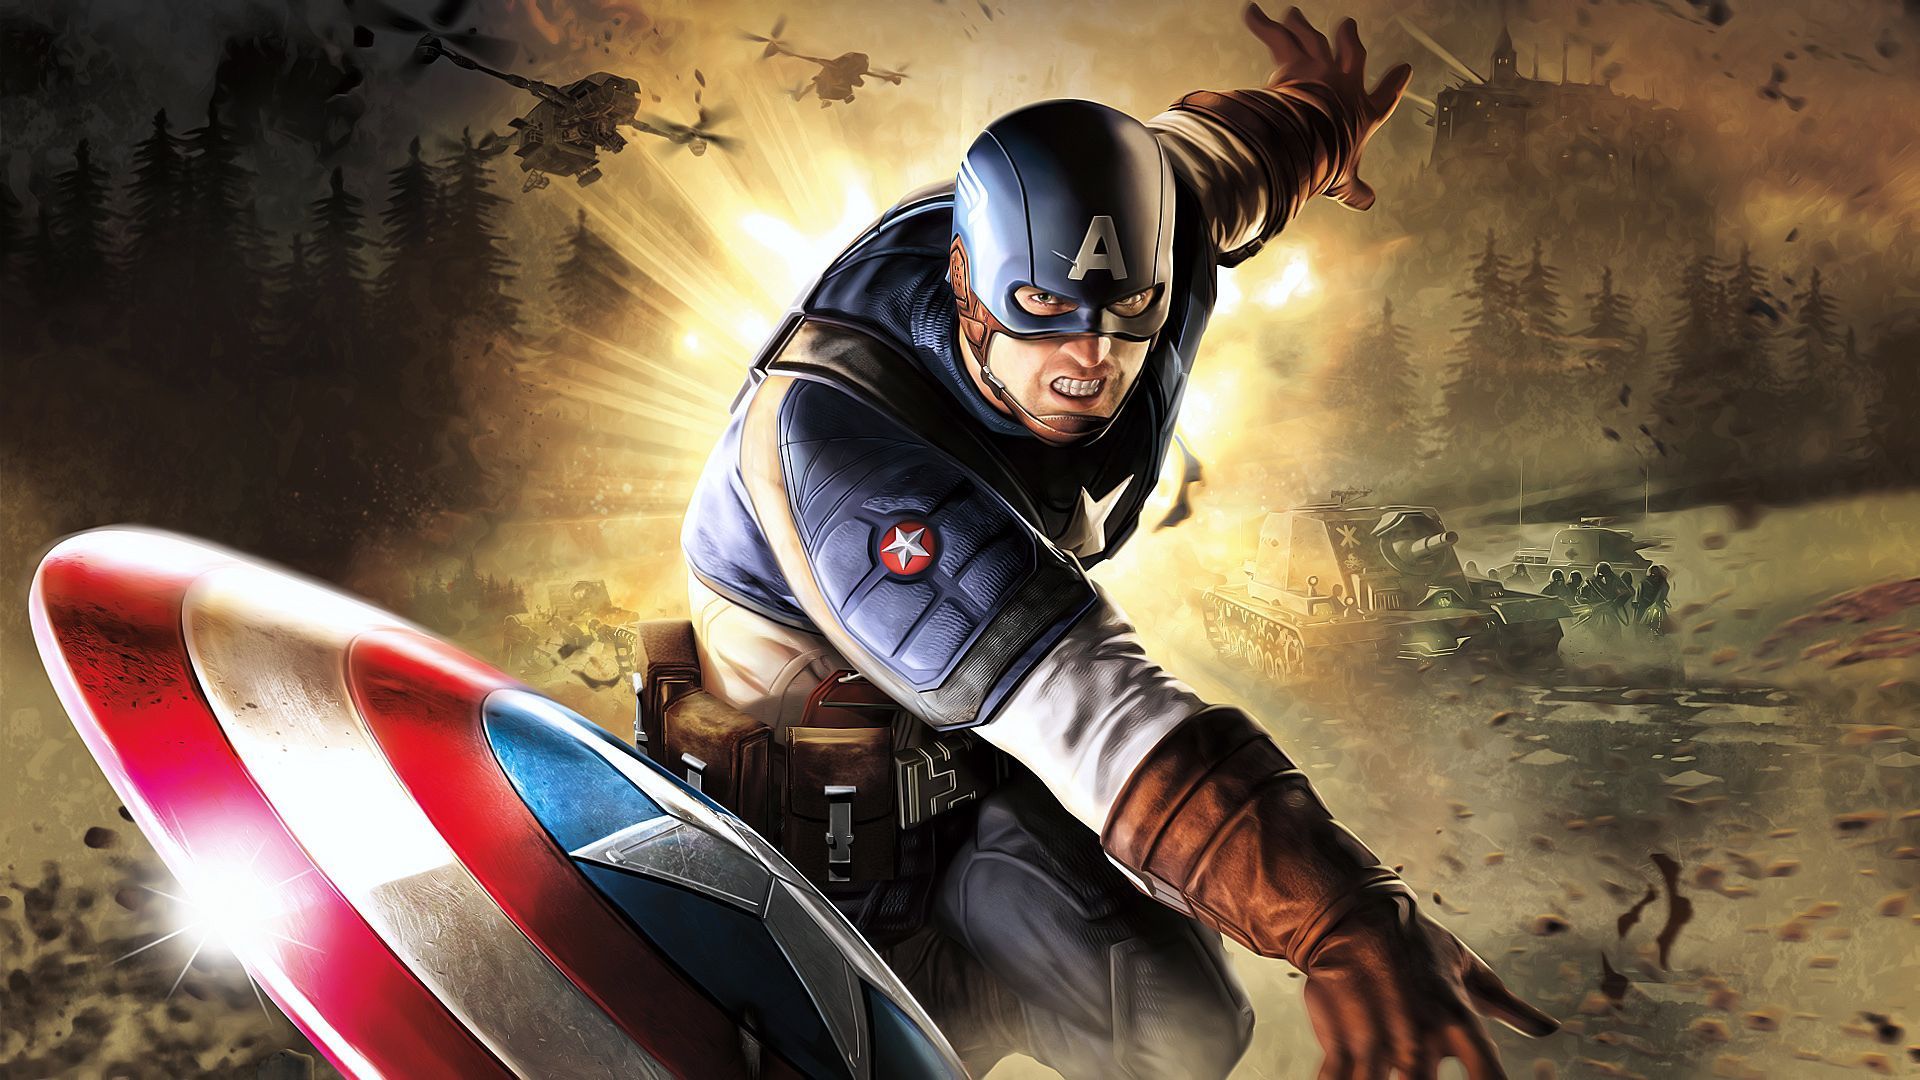 Captain America Avengers HD Image Wallpaper. Captain america wallpaper, Captain america super soldier, Captain america